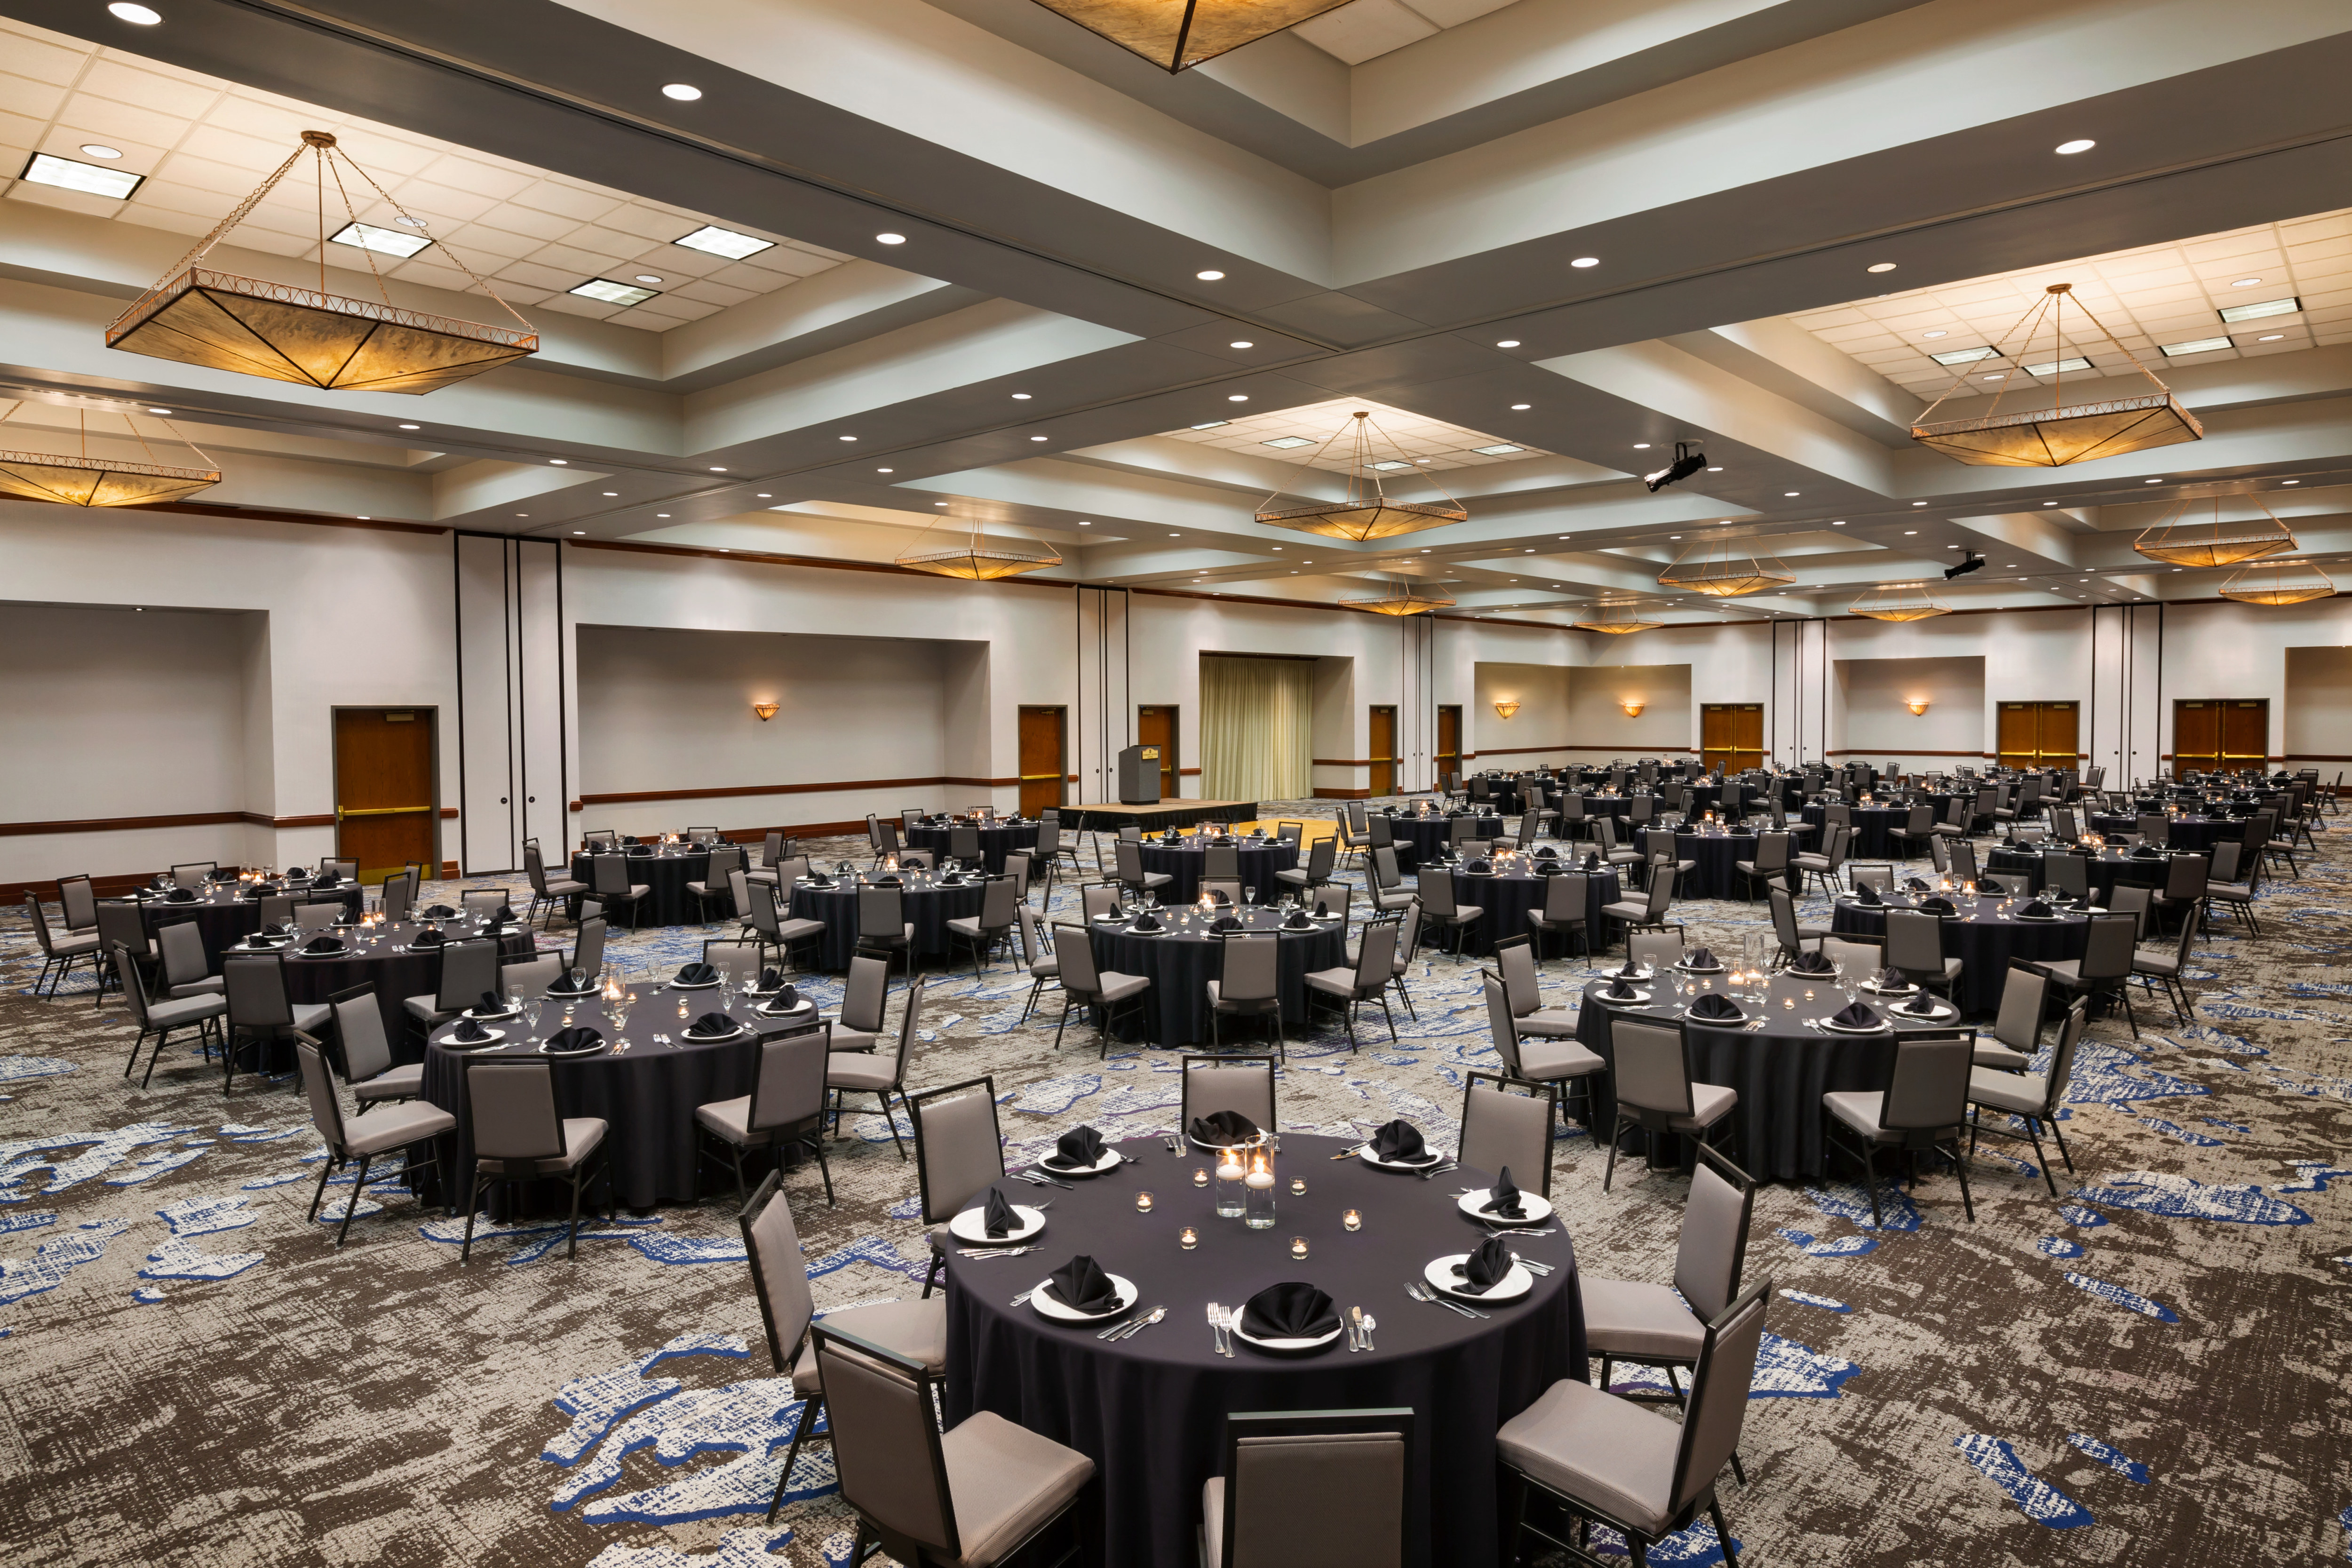 Embassy Suites Dallas - DFW Airport North Outdoor World Hotel, TX - Heritage Ballroom Banquet